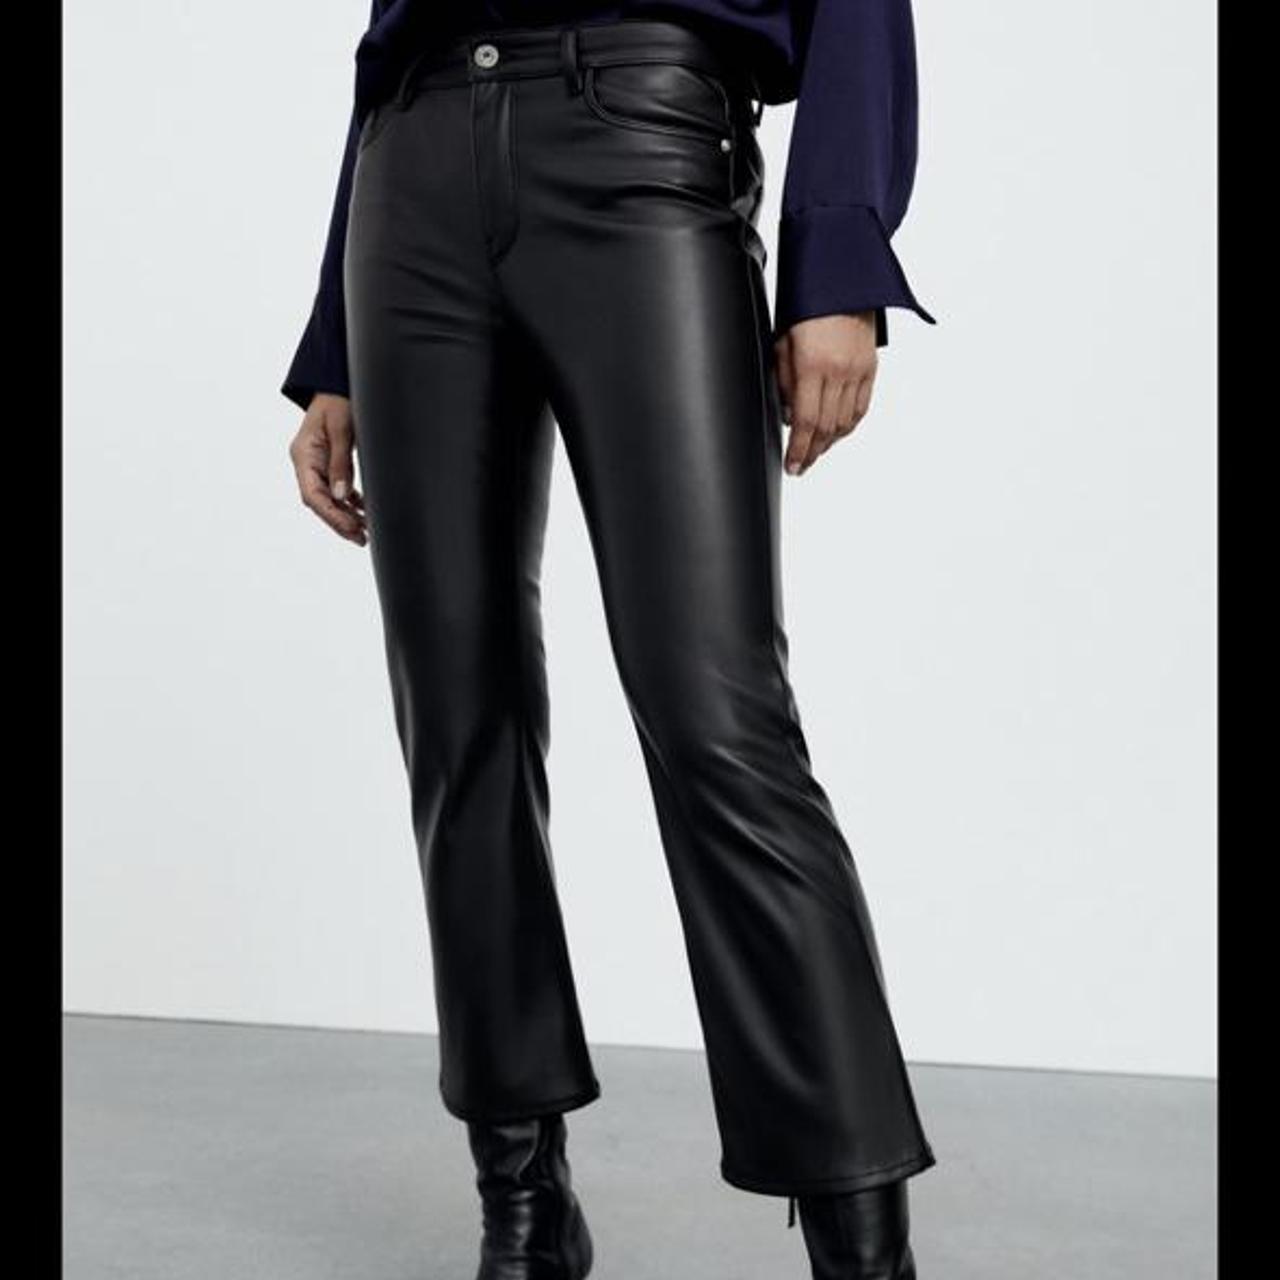 Zara mini flare faux leather pants 🖤 no tag but... - Depop